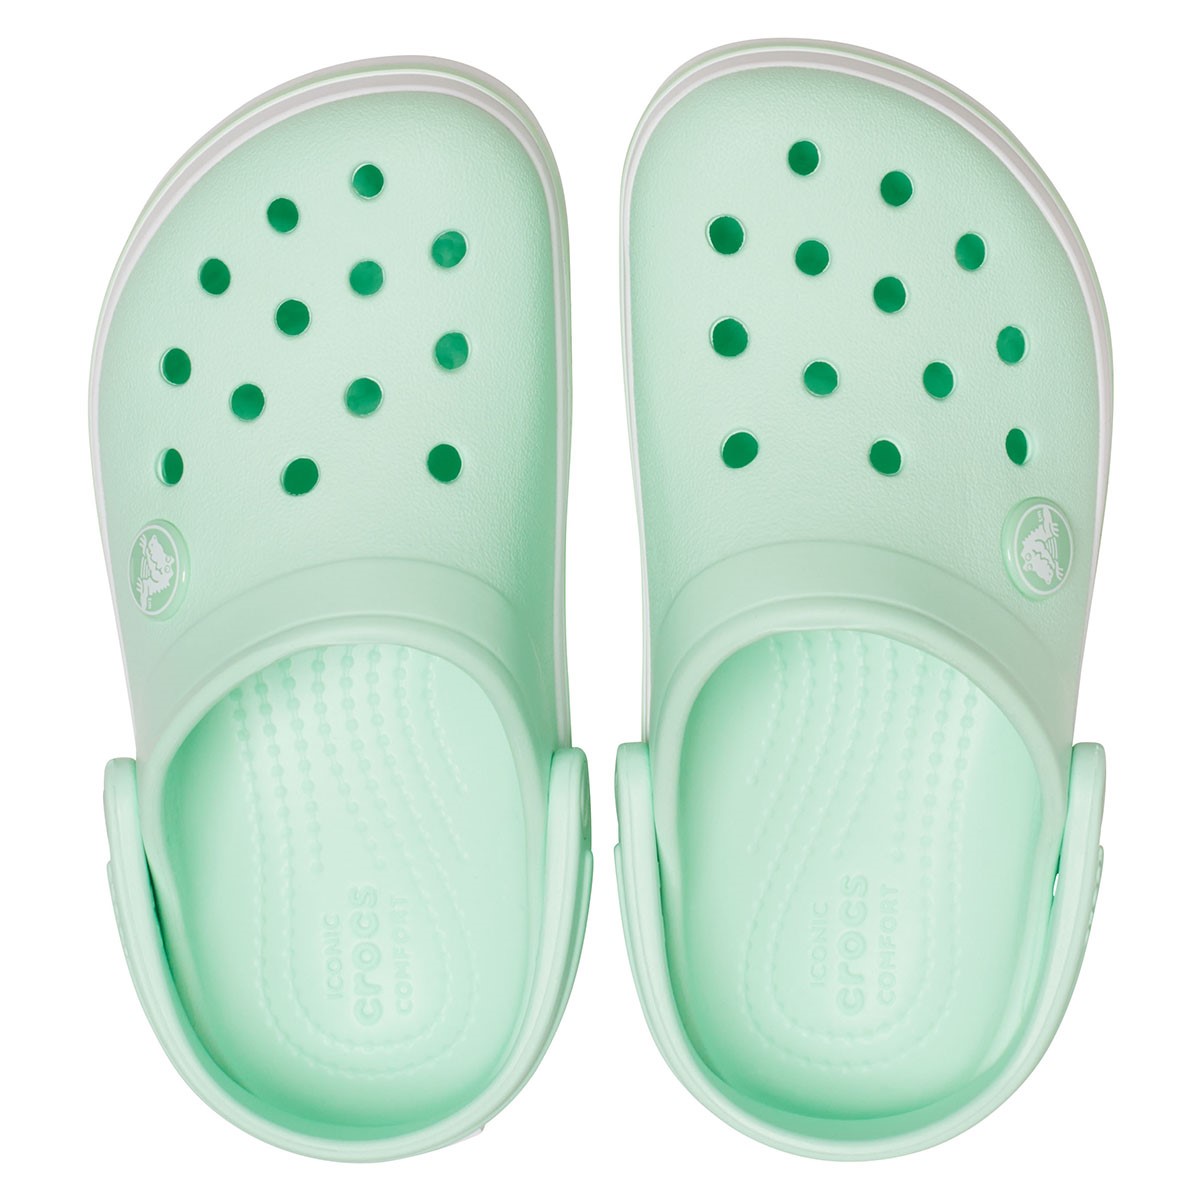 Crocs Sandalet 204537 Neo Mint